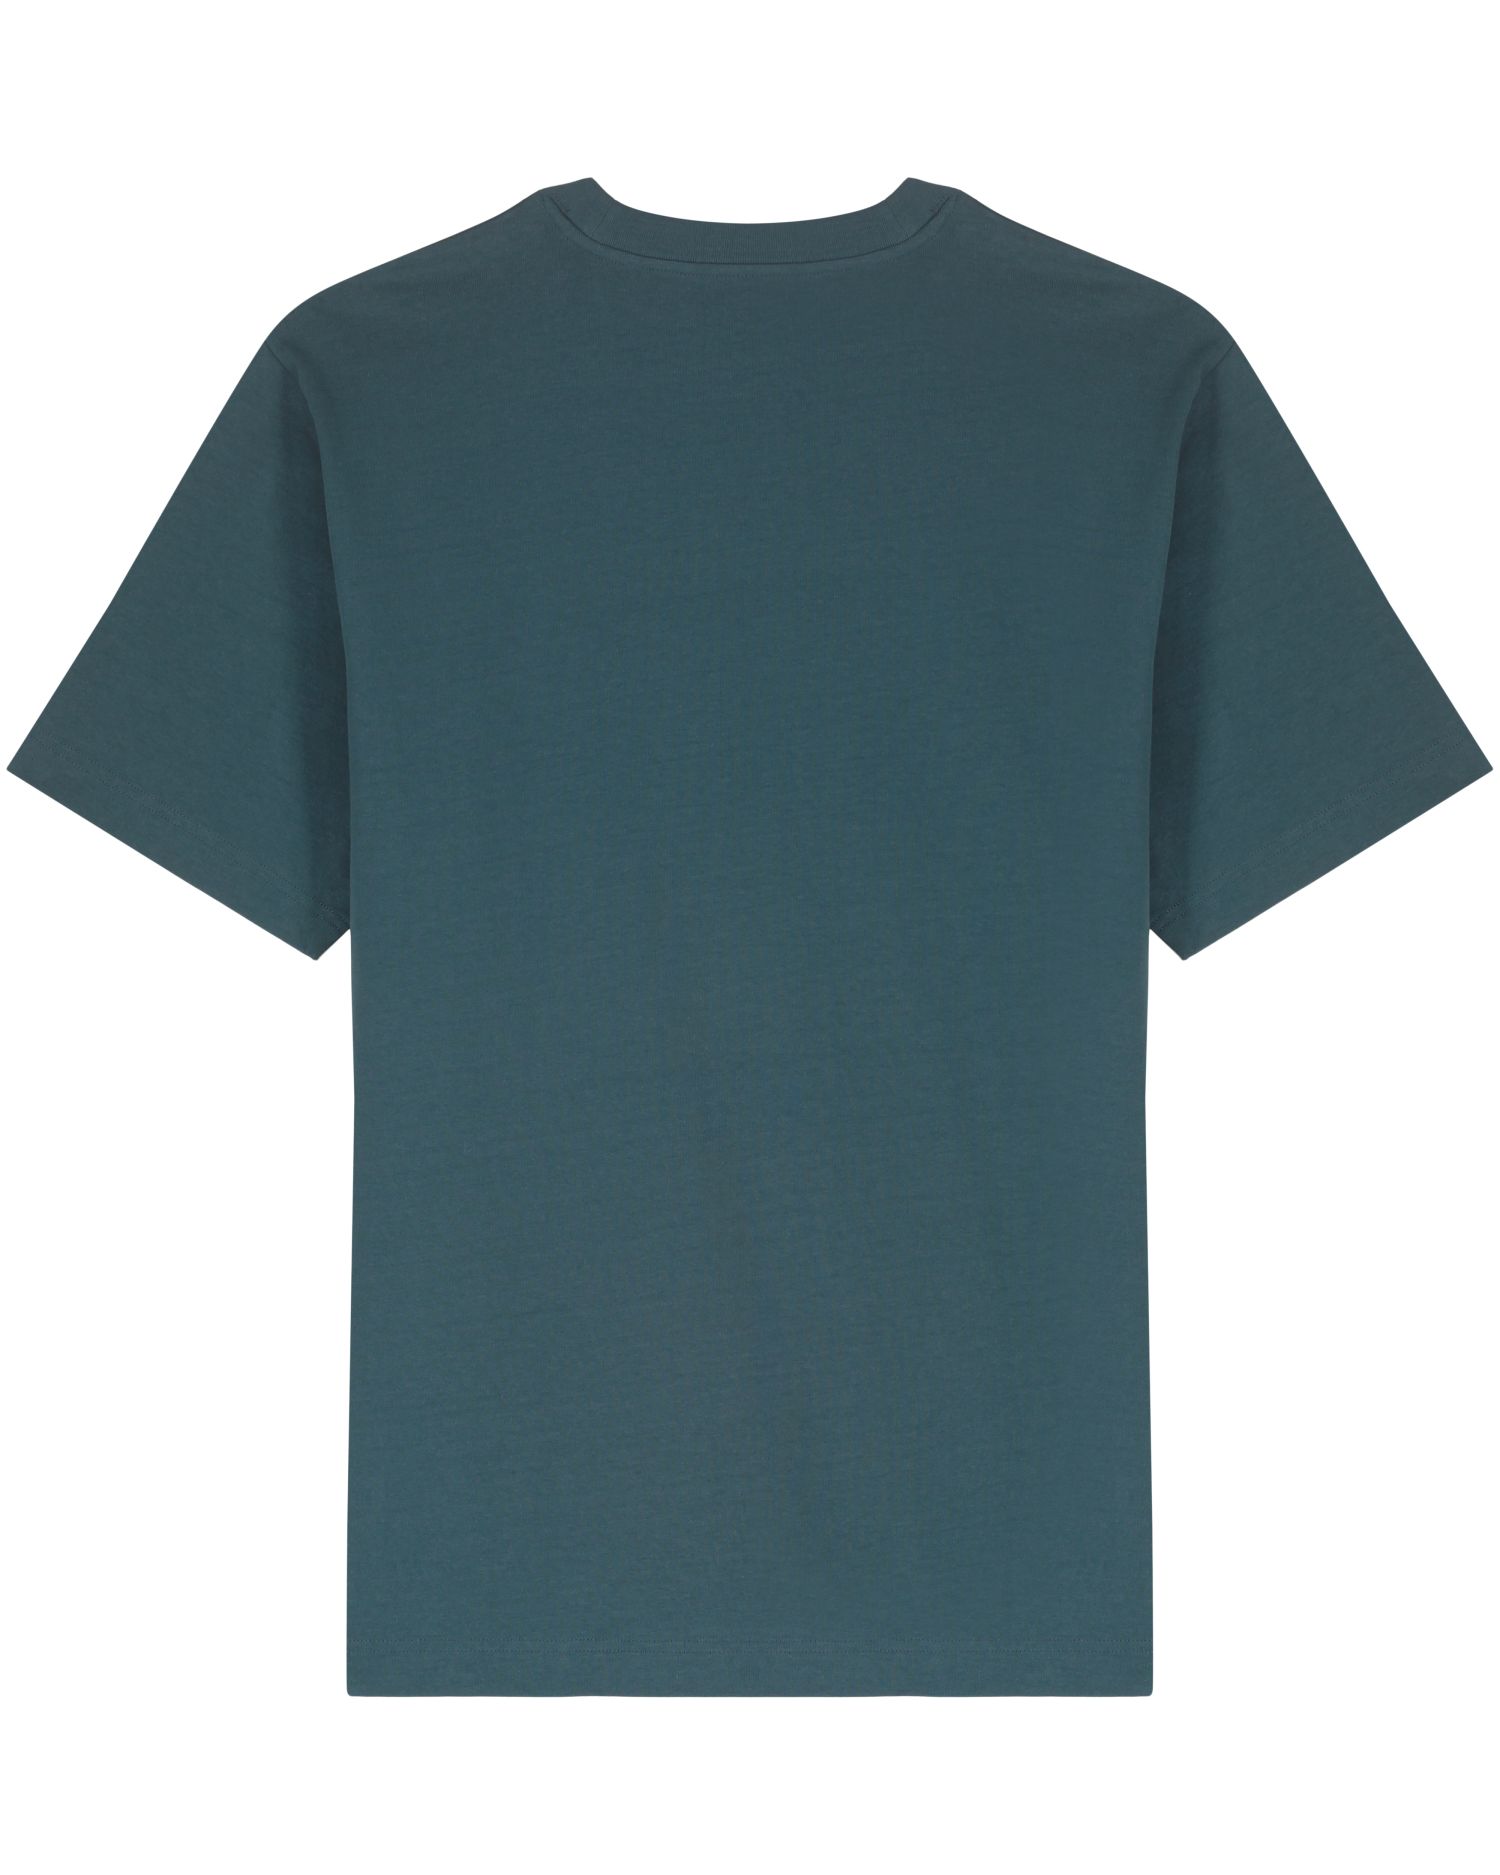 T-Shirt Freestyler in Farbe Stargazer